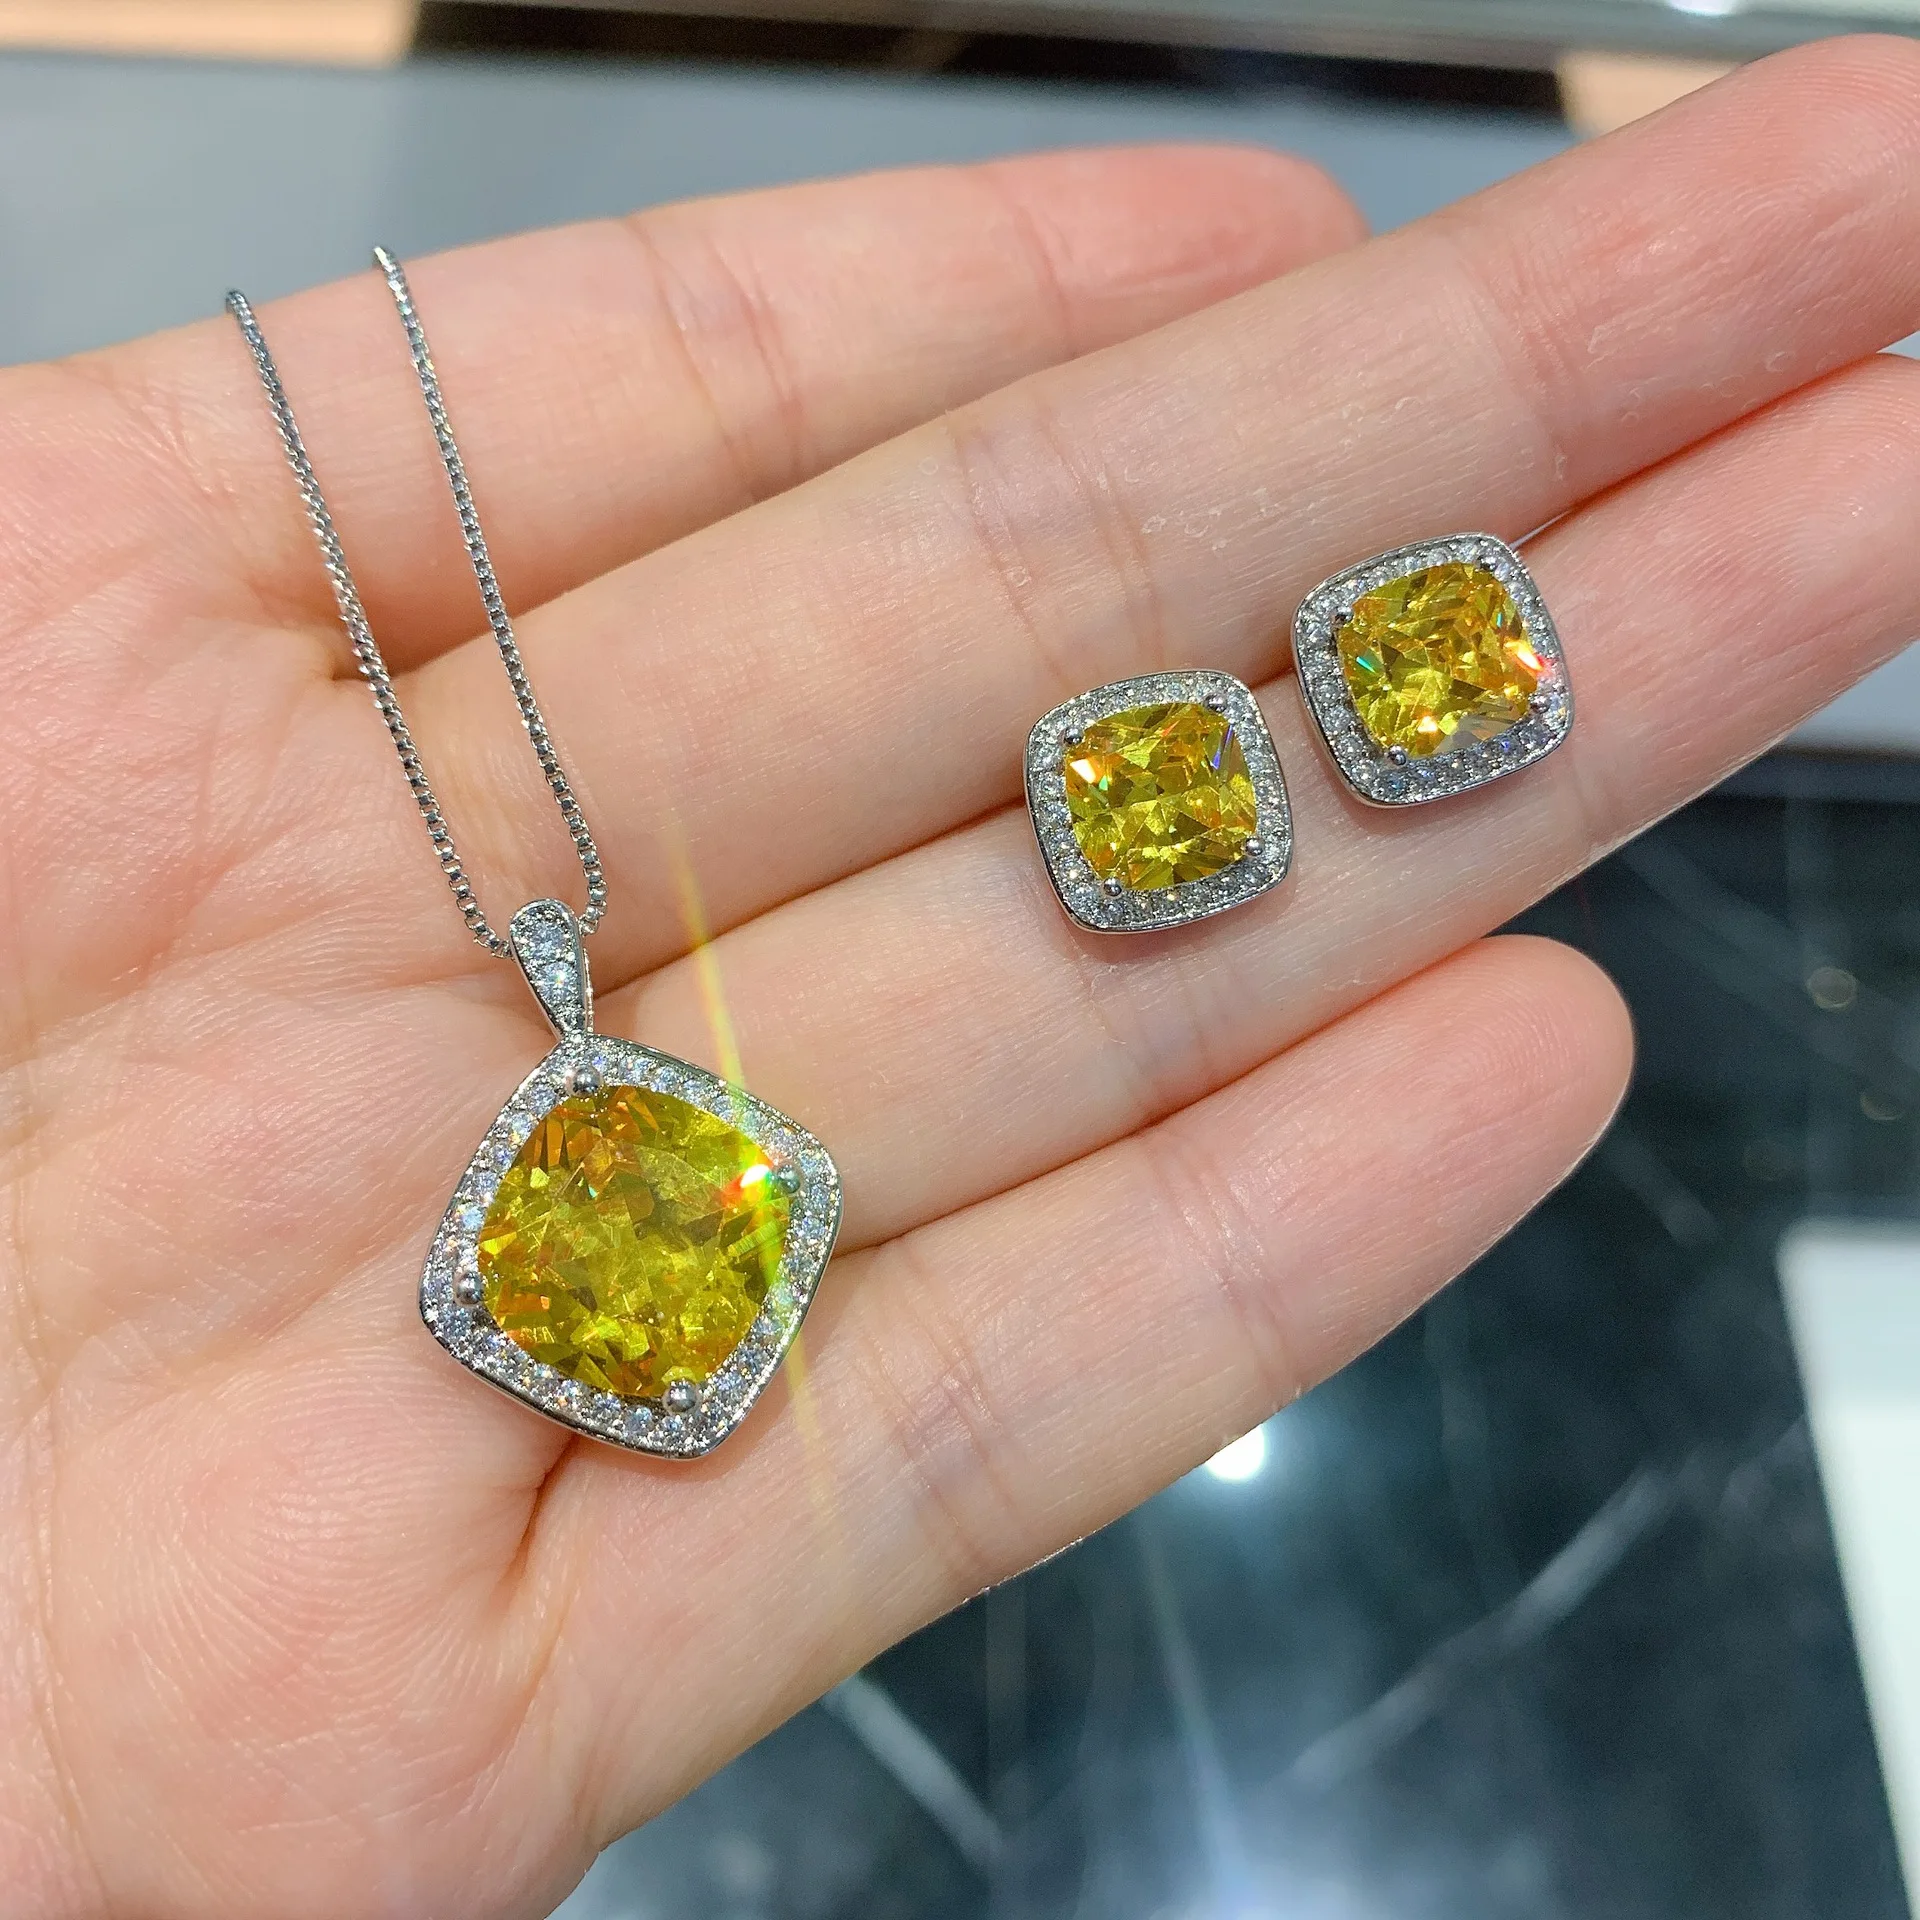 

Funmode Trendy Square Shape Yellow CZ Pendant Necklace Jewelry Sets For Women Gifts Pendientes boucle d'oreille Wholesale FS47